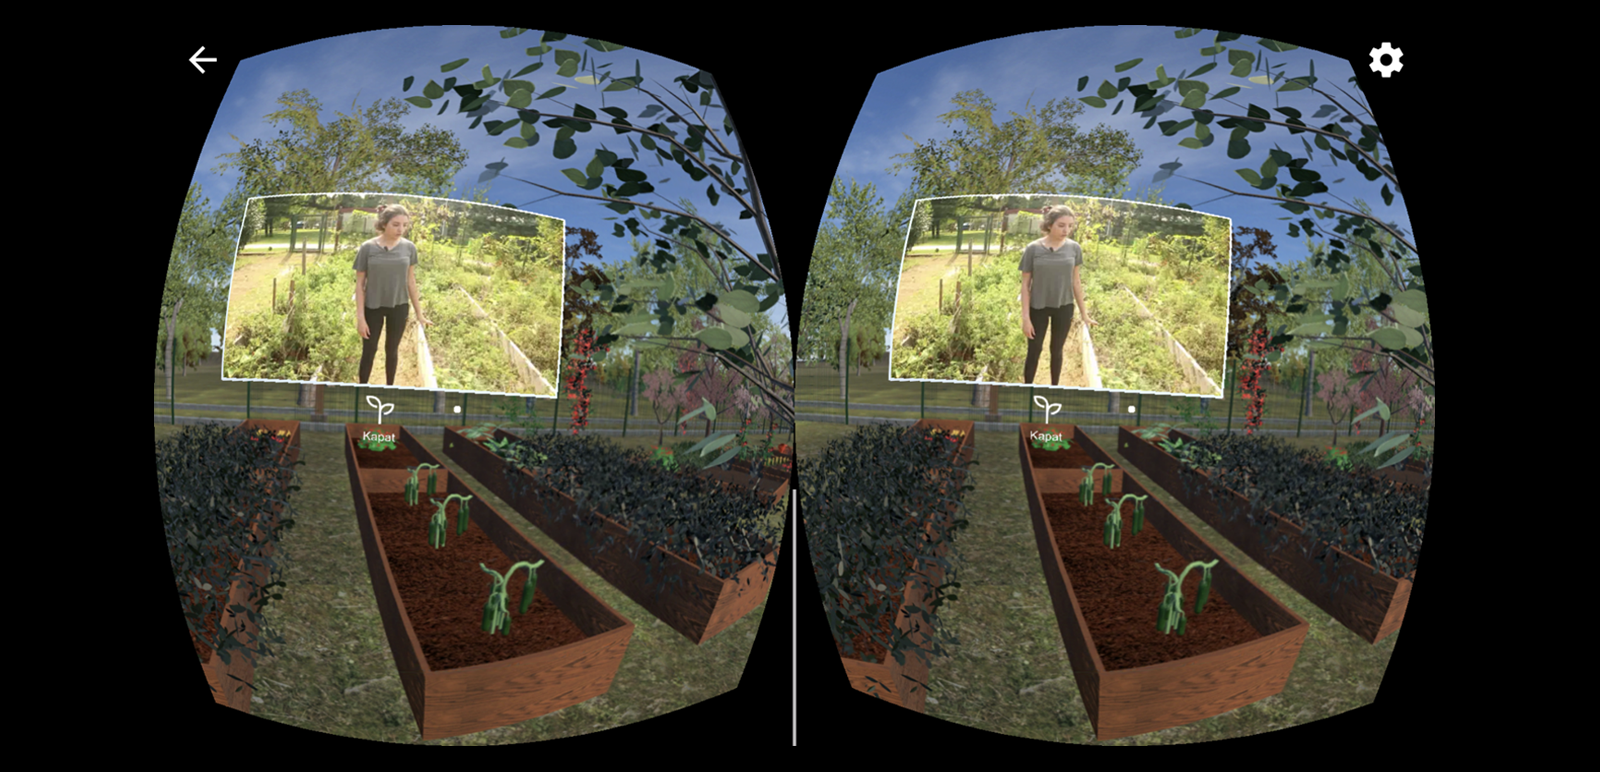 Saint Joseph Community Garden VR (Virtual Reality) Application 1